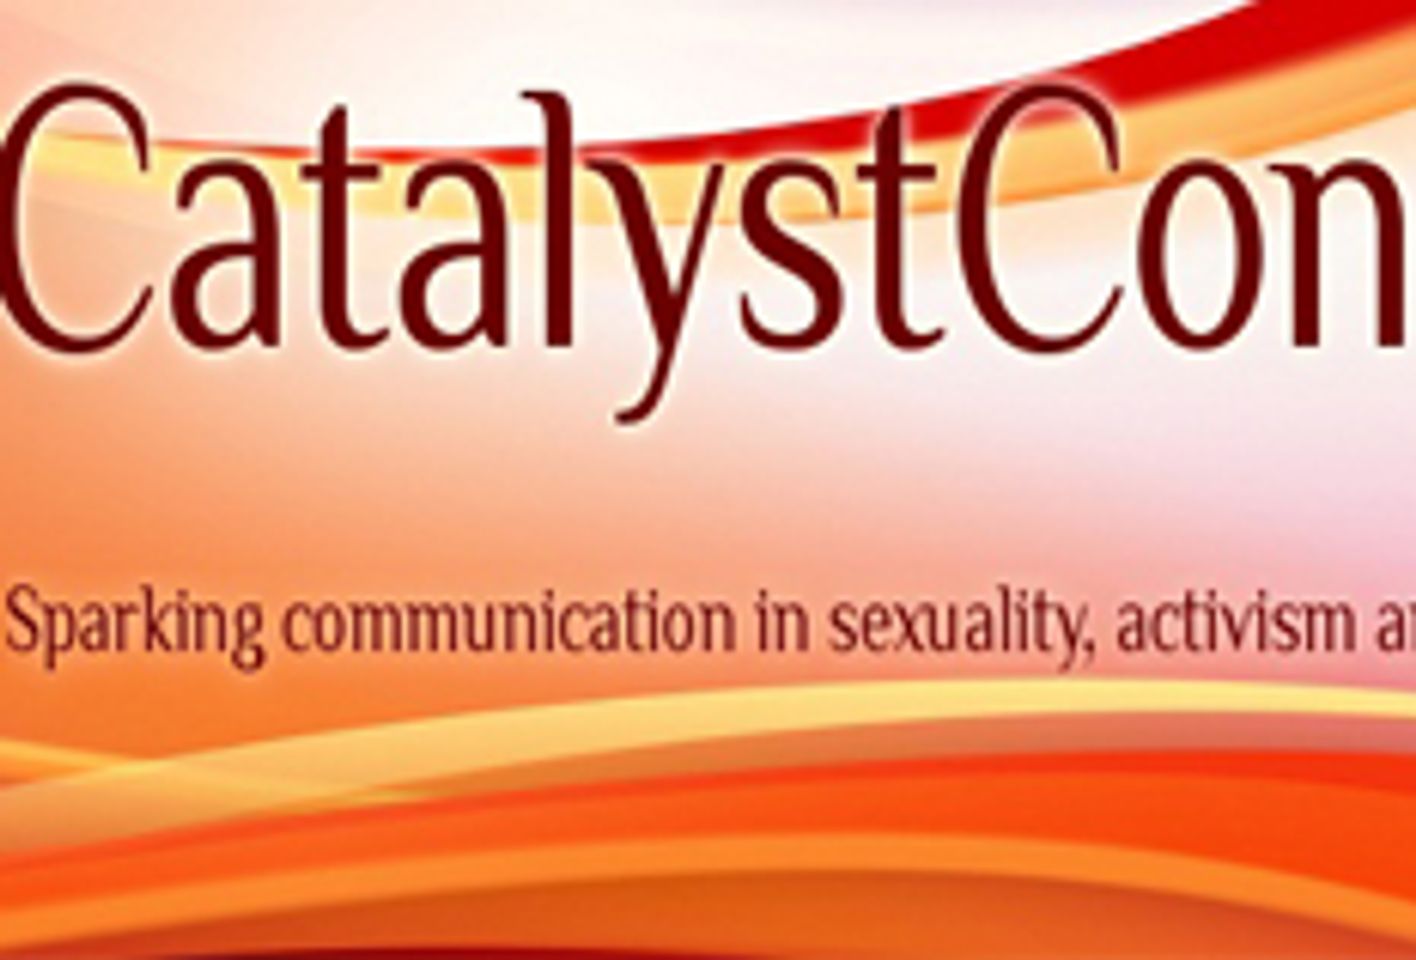 CatalystCon East Announces Saturday Evening Entertainment